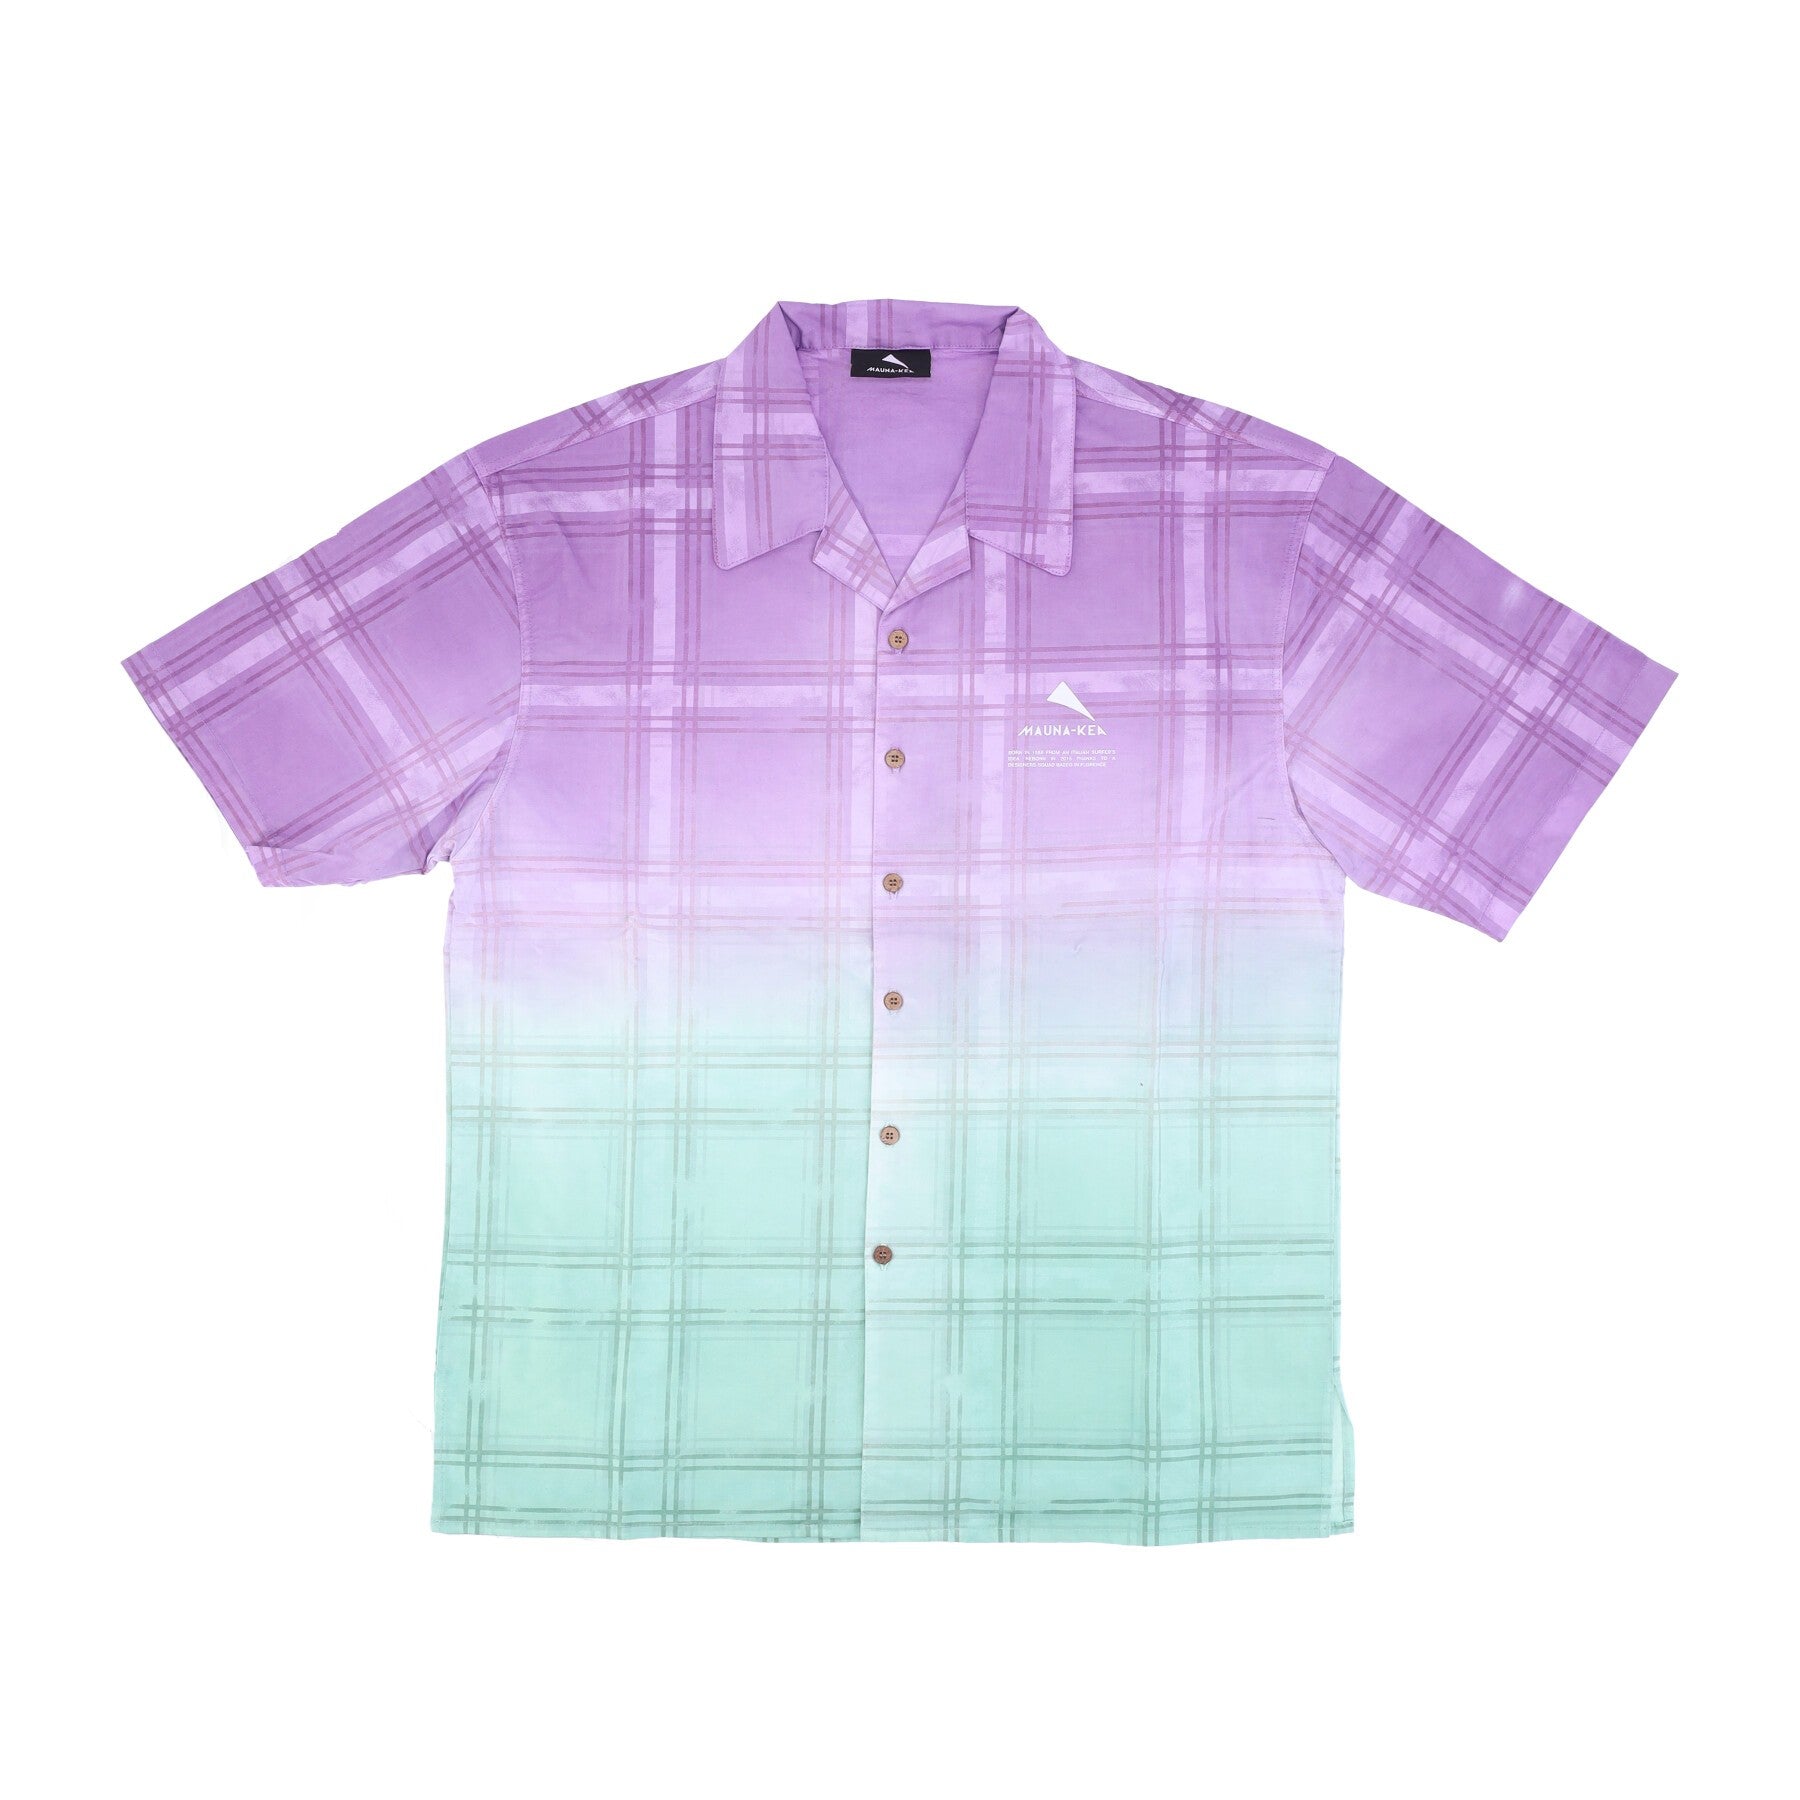 Men's Short Sleeve Shirt Checked Degrade' Bowling Shirt Purple/green